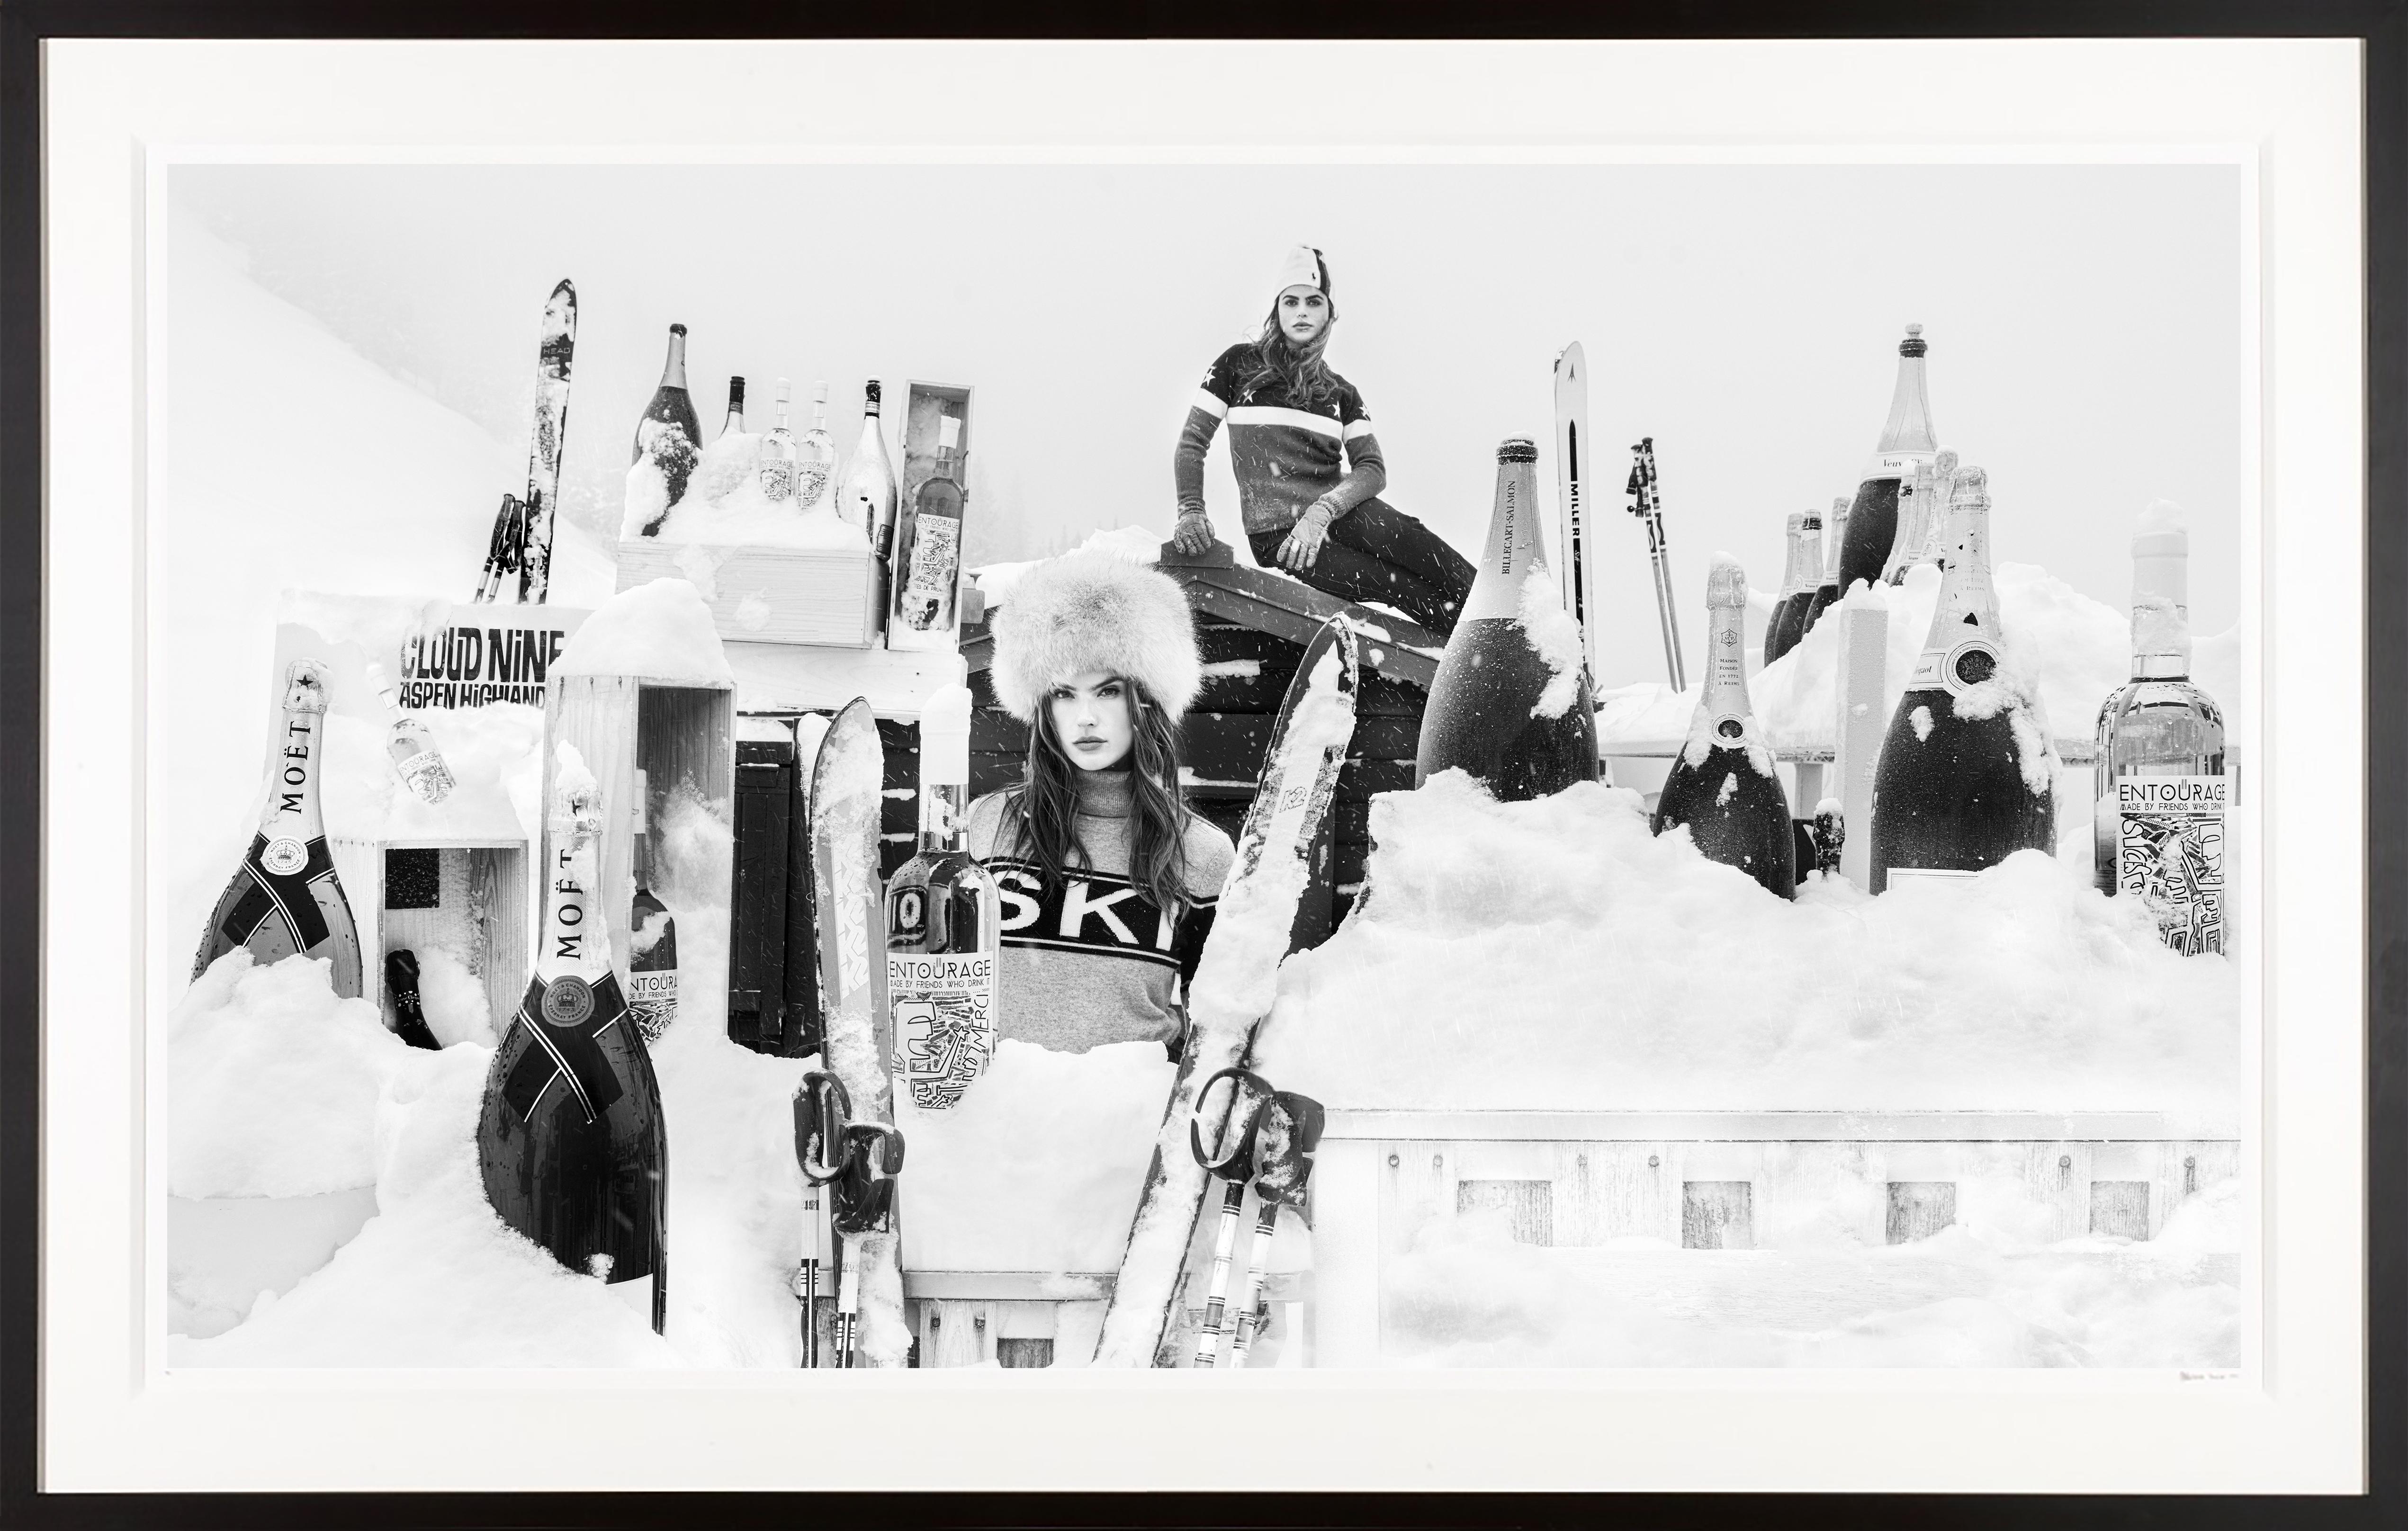 David Yarrow Landscape Photograph - "Cloud 9" Sexy Aspen Ski Image with Models Brooks Nader and Alessandra Ambrosio